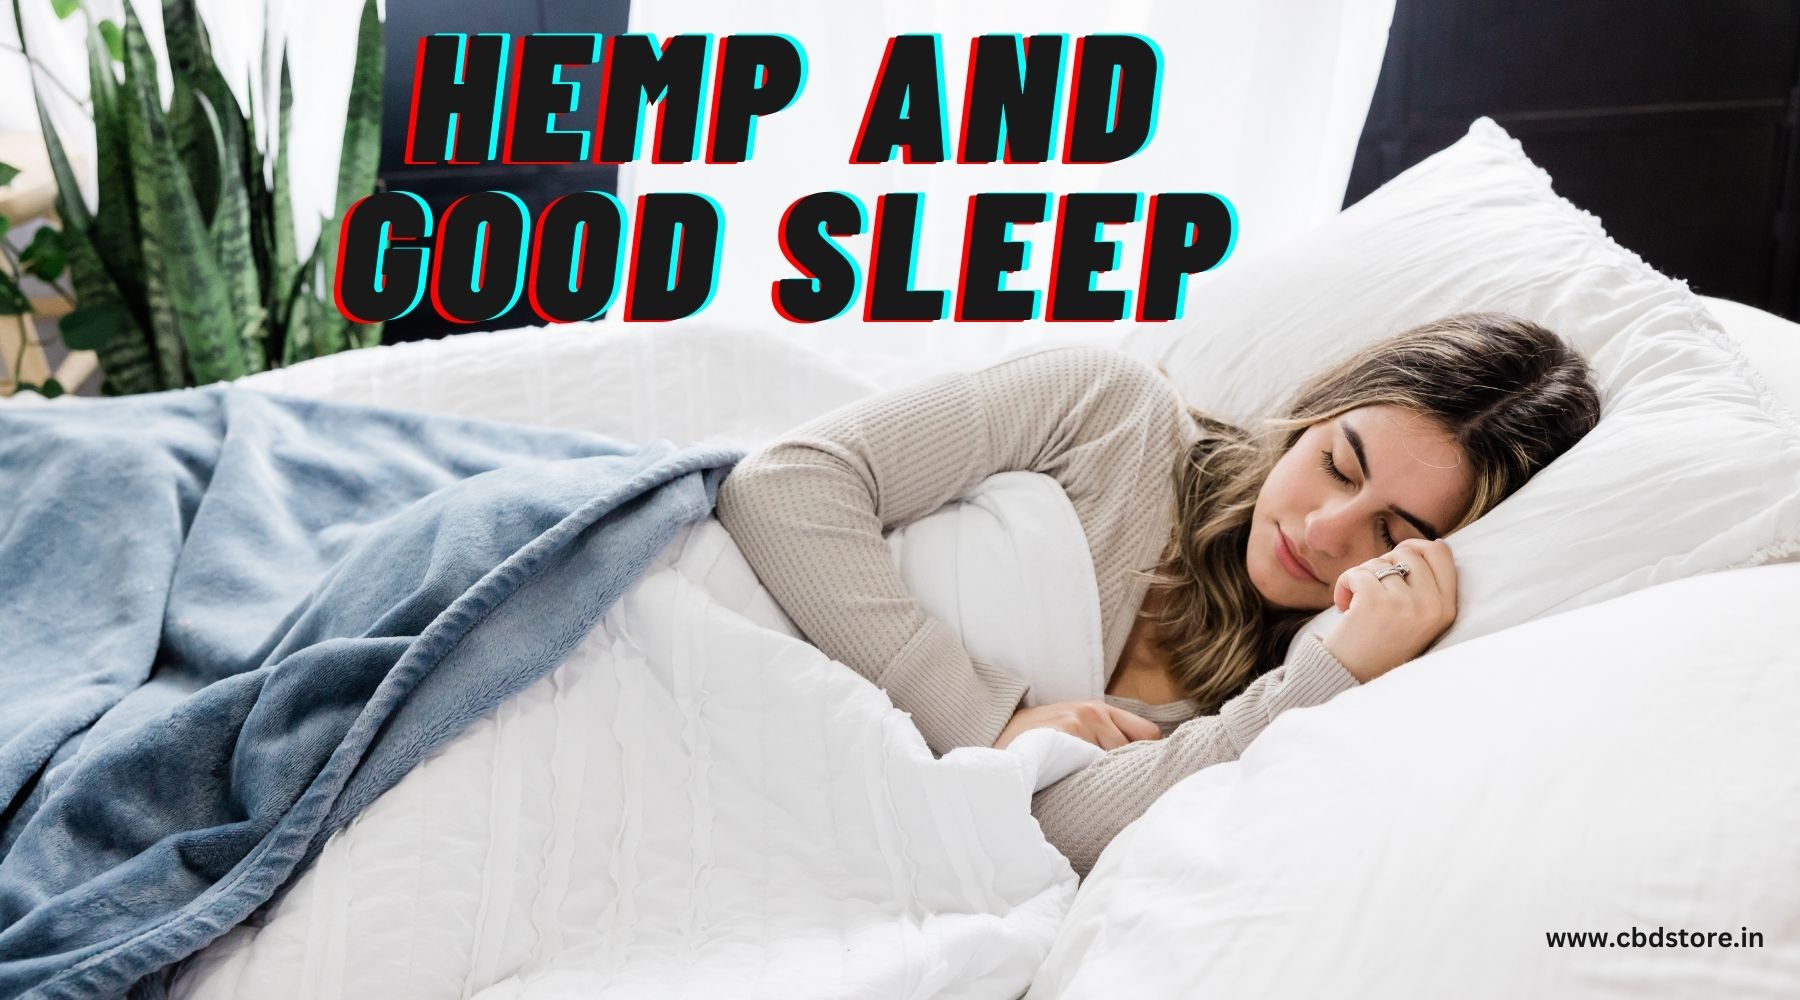 Hemp and Good Sleep: the undeniable correlation